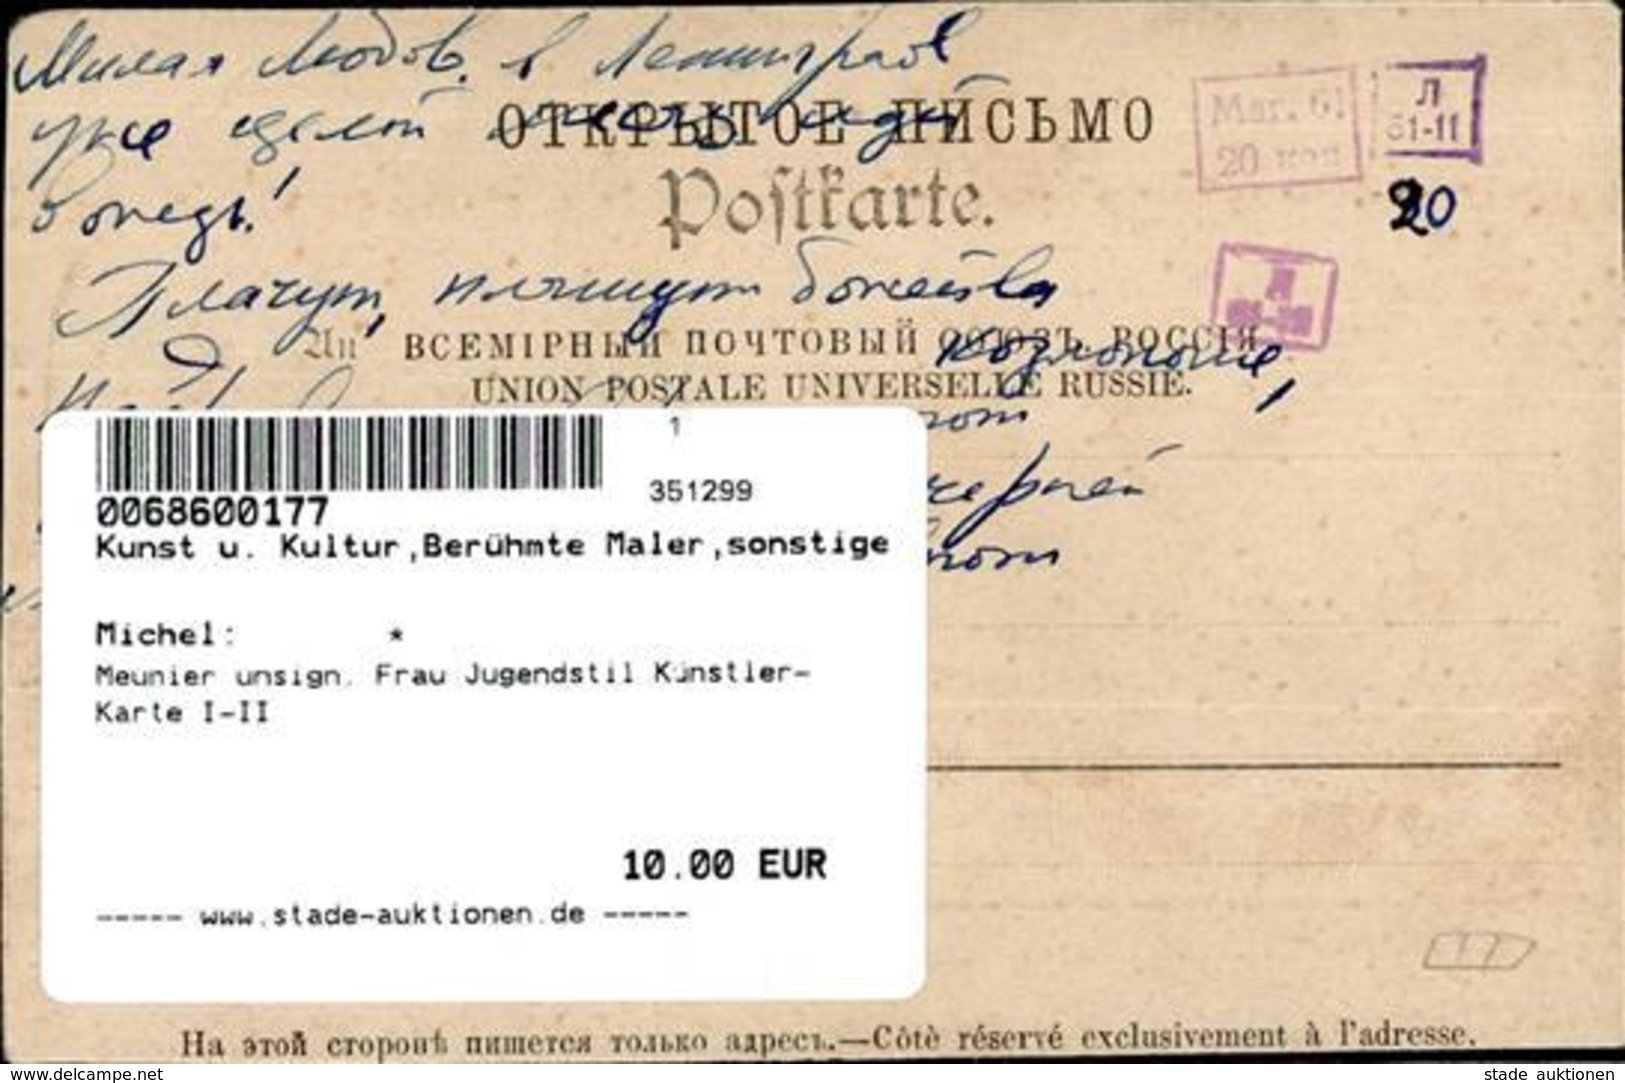 Meunier Unsign. Frau Jugendstil Künstler-Karte I-II Art Nouveau - Non Classificati